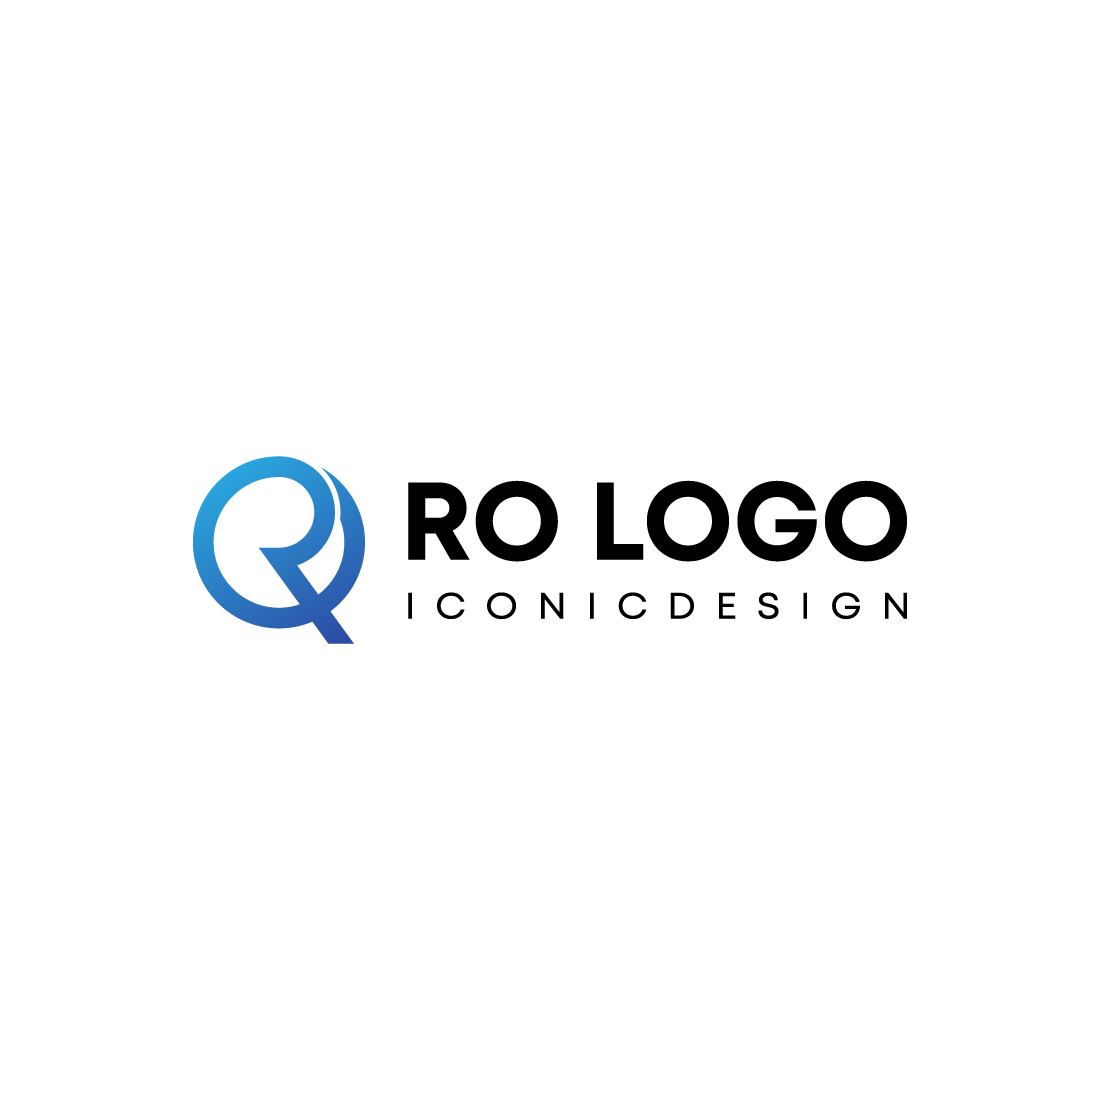 RO logo preview image.